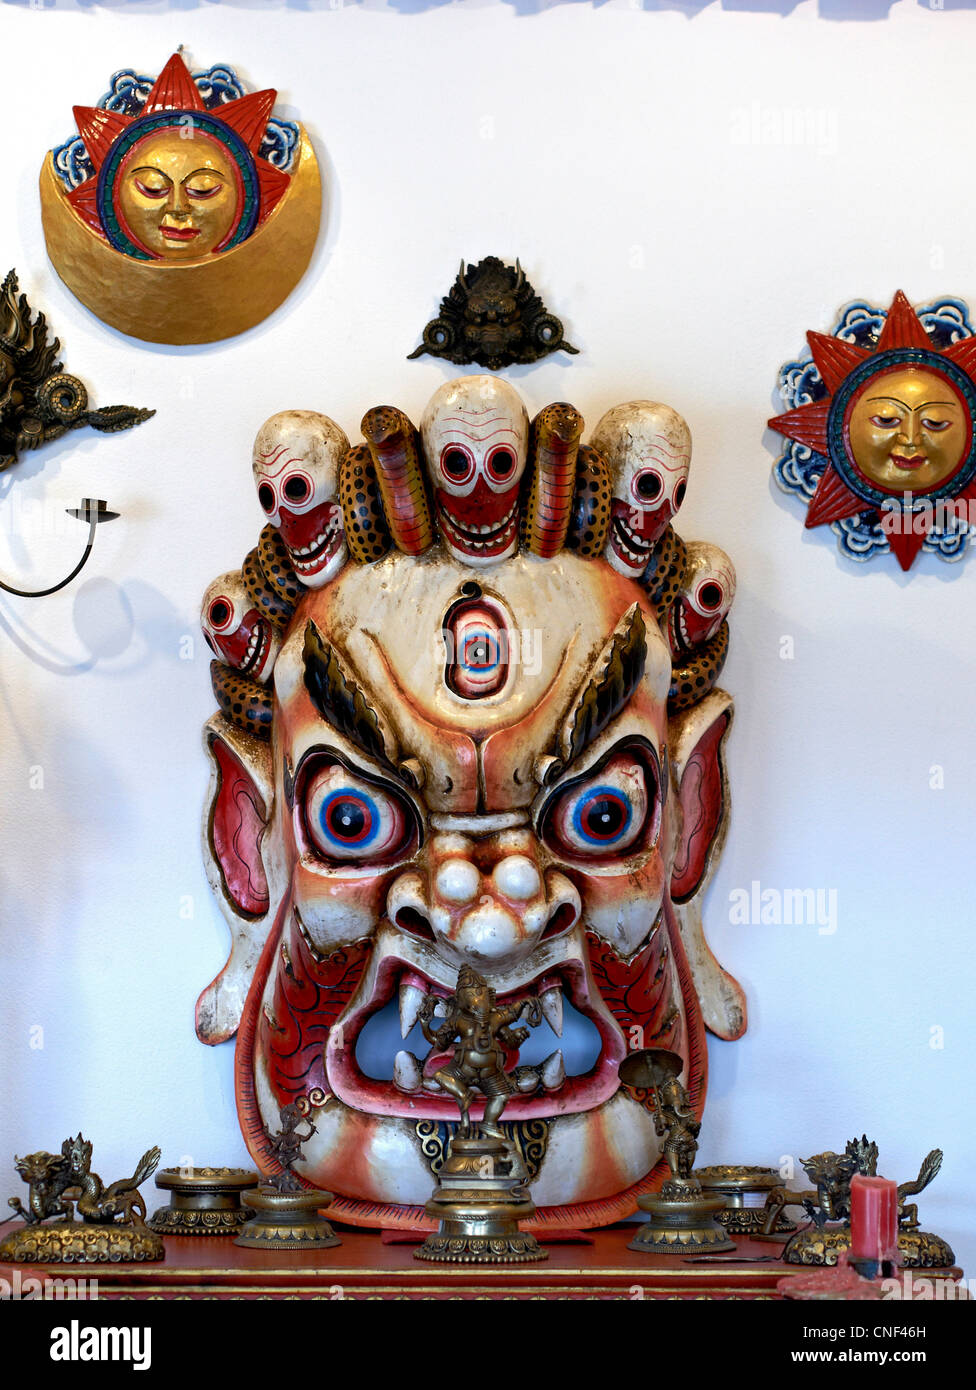 Maschera Tsechu. Maschere ornamentali himalayane bhutanesi Tsechu per scongiurare gli spiriti malvagi Foto Stock